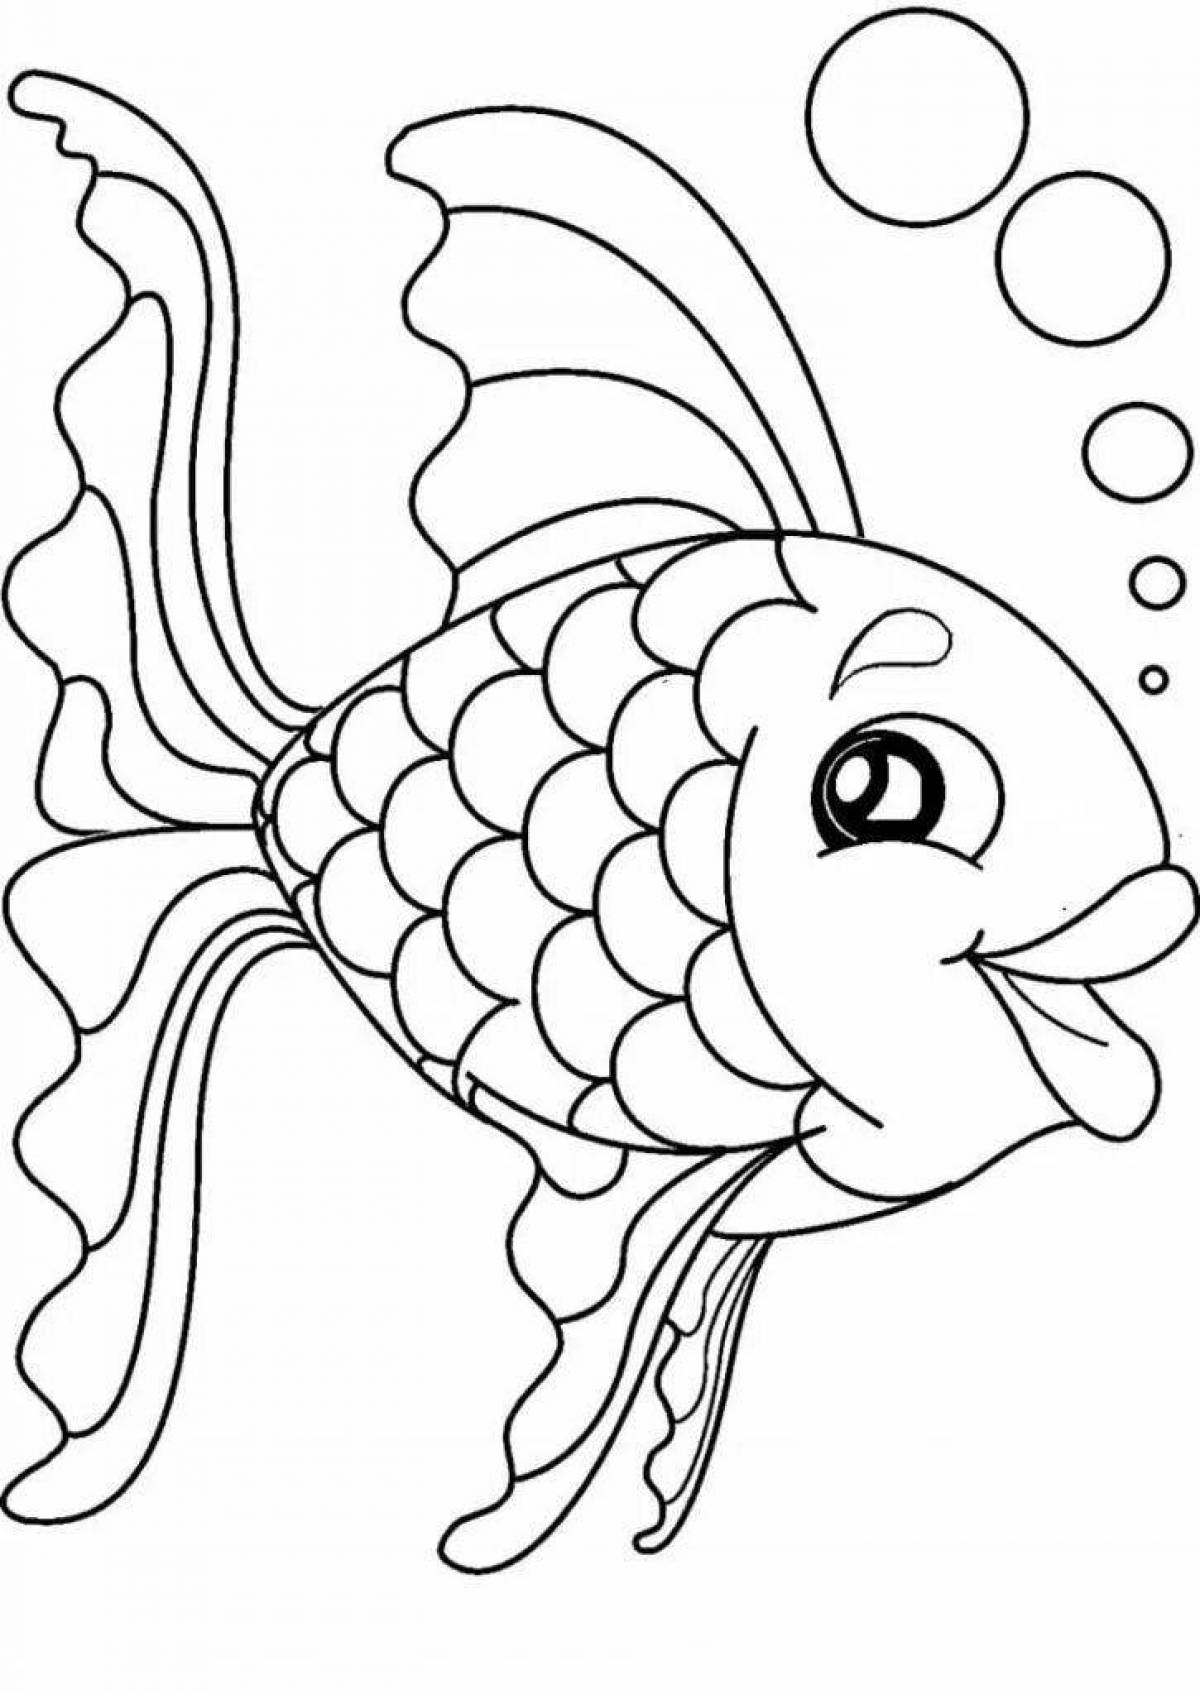 Playful drawing of a goldfish